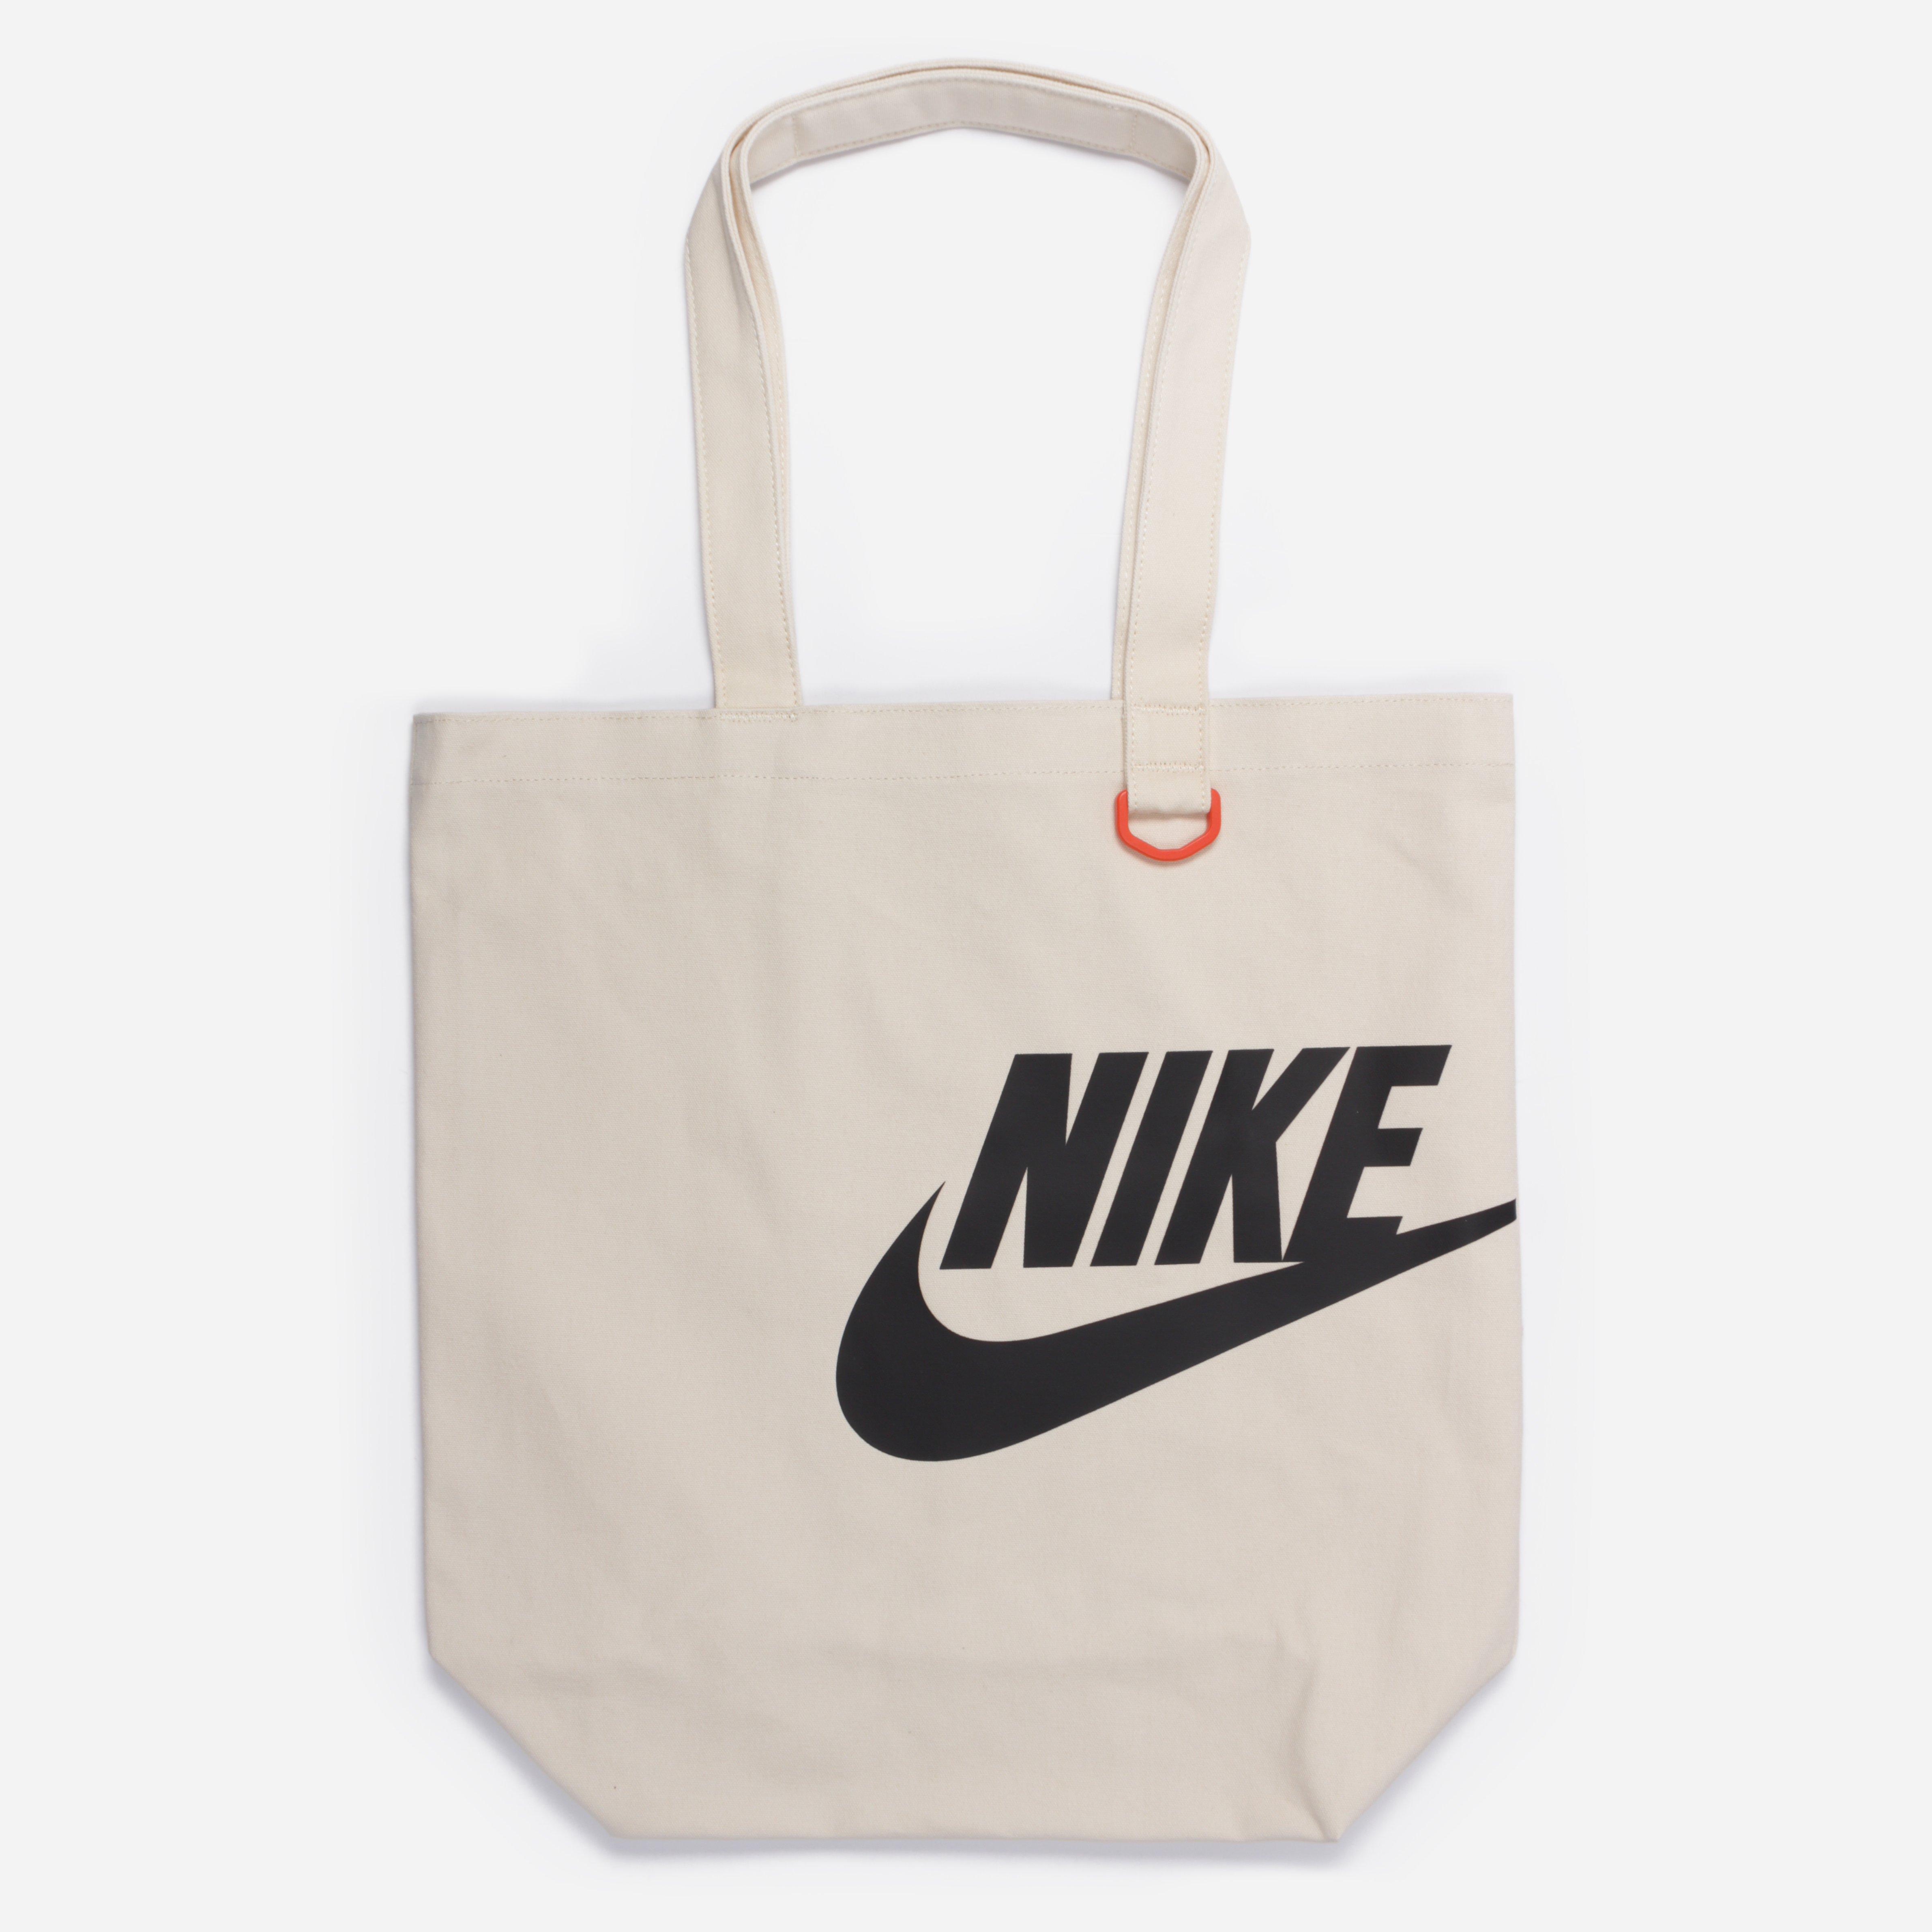 Nike Heritage Tote Bag in Beige (Natural) for Men - Lyst